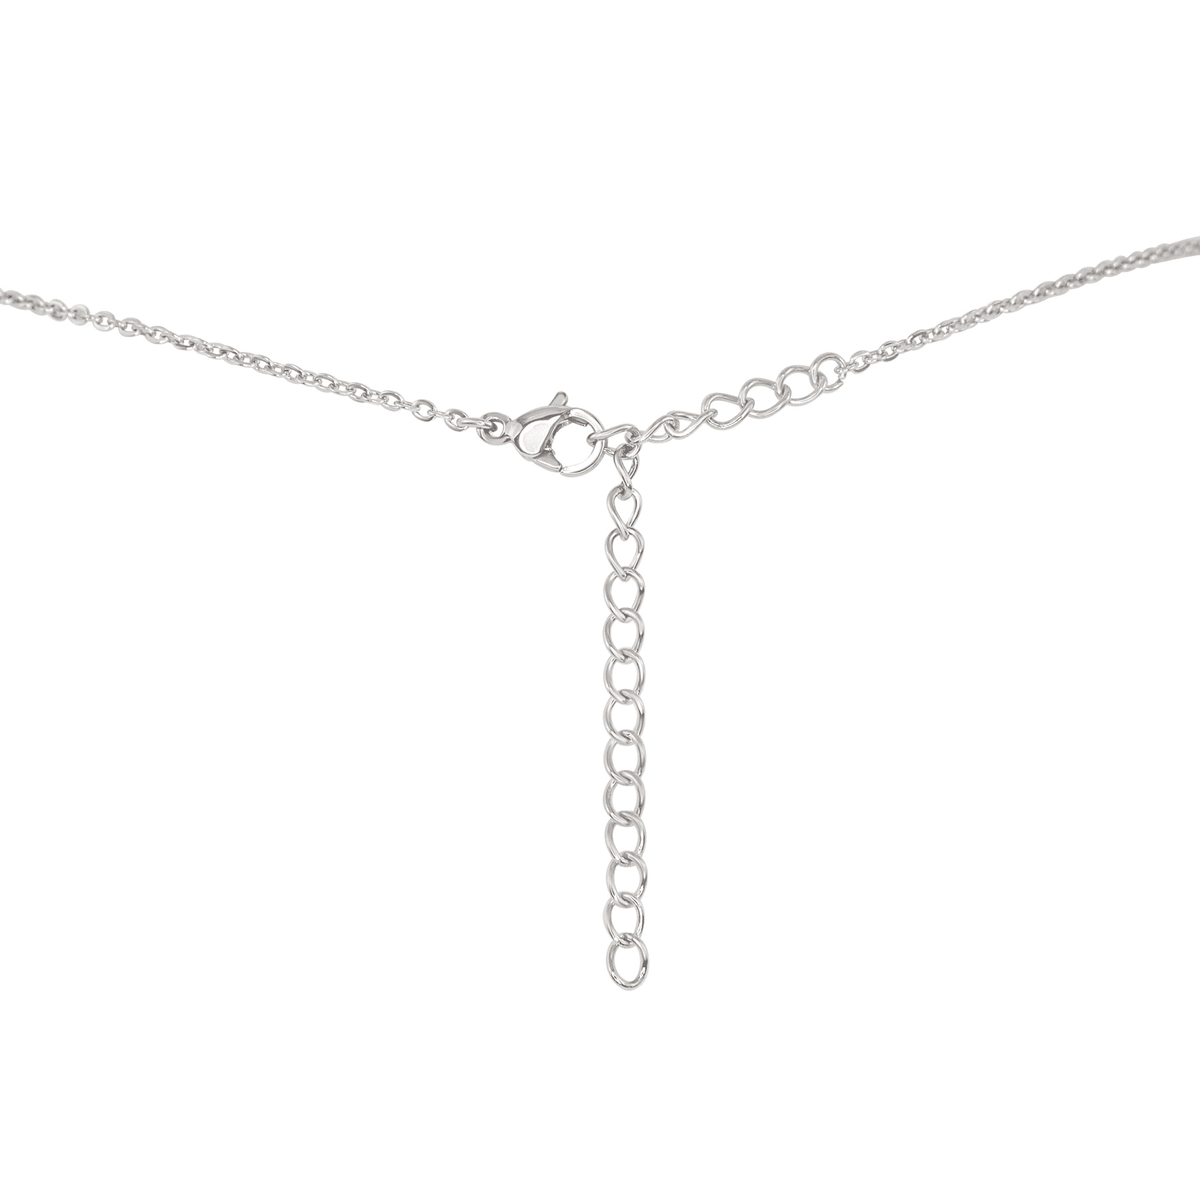 White Freshwater Pearl Beaded Chain Choker Necklace - White Freshwater Pearl Beaded Chain Choker Necklace - 14k Gold Fill - Luna Tide Handmade Crystal Jewellery